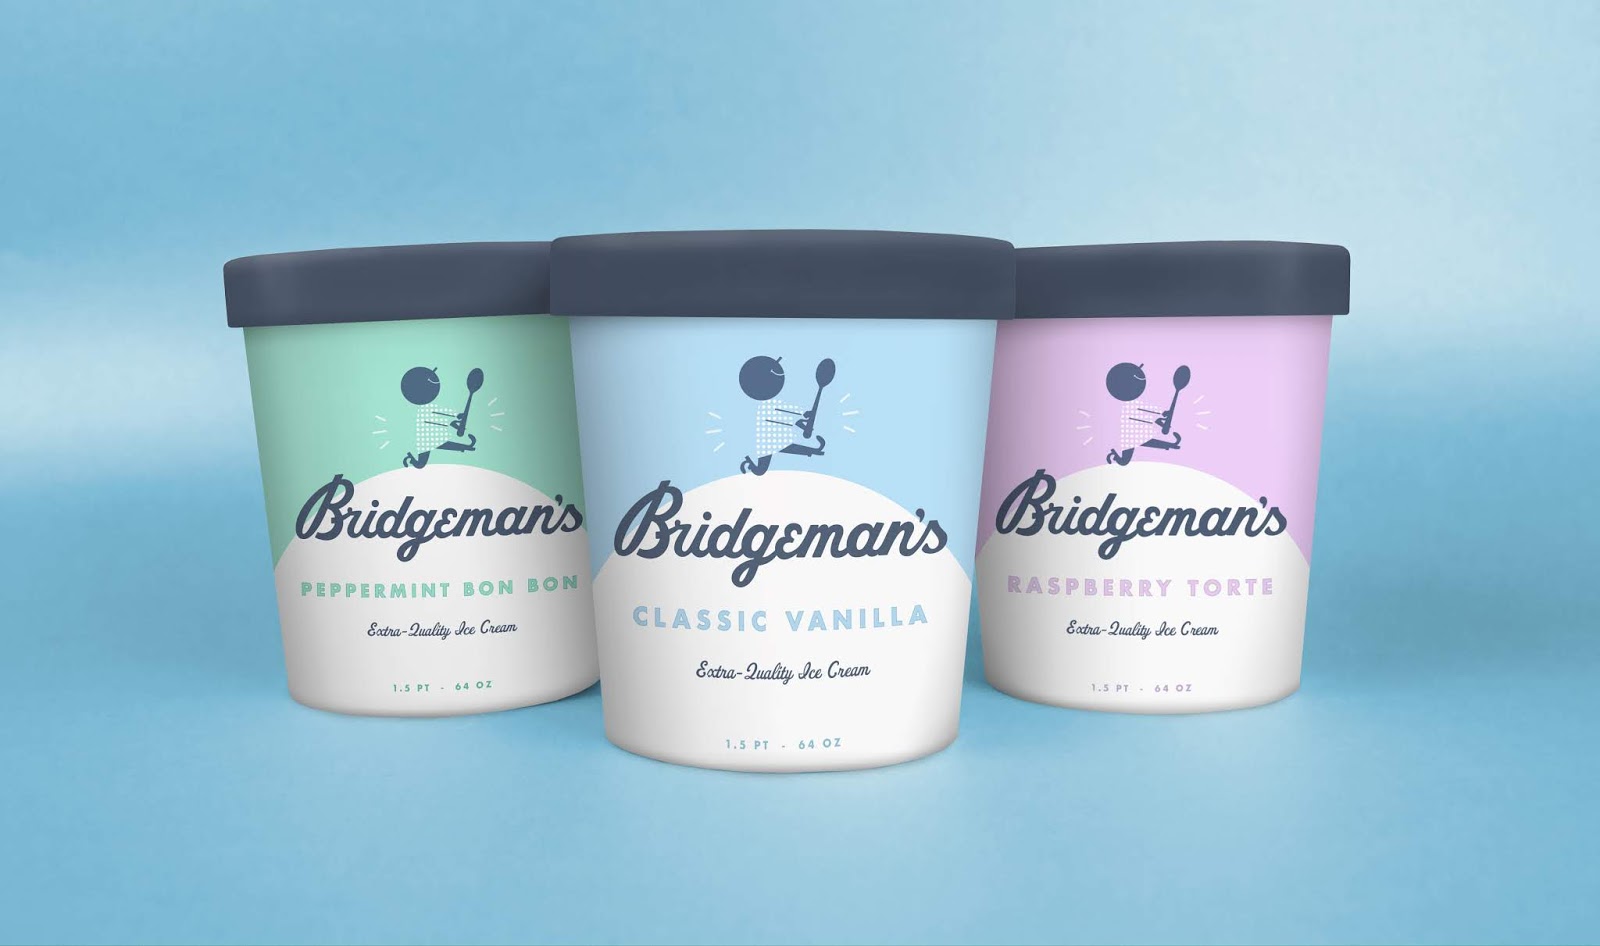 Bridgeman's冰淇淋包装设计